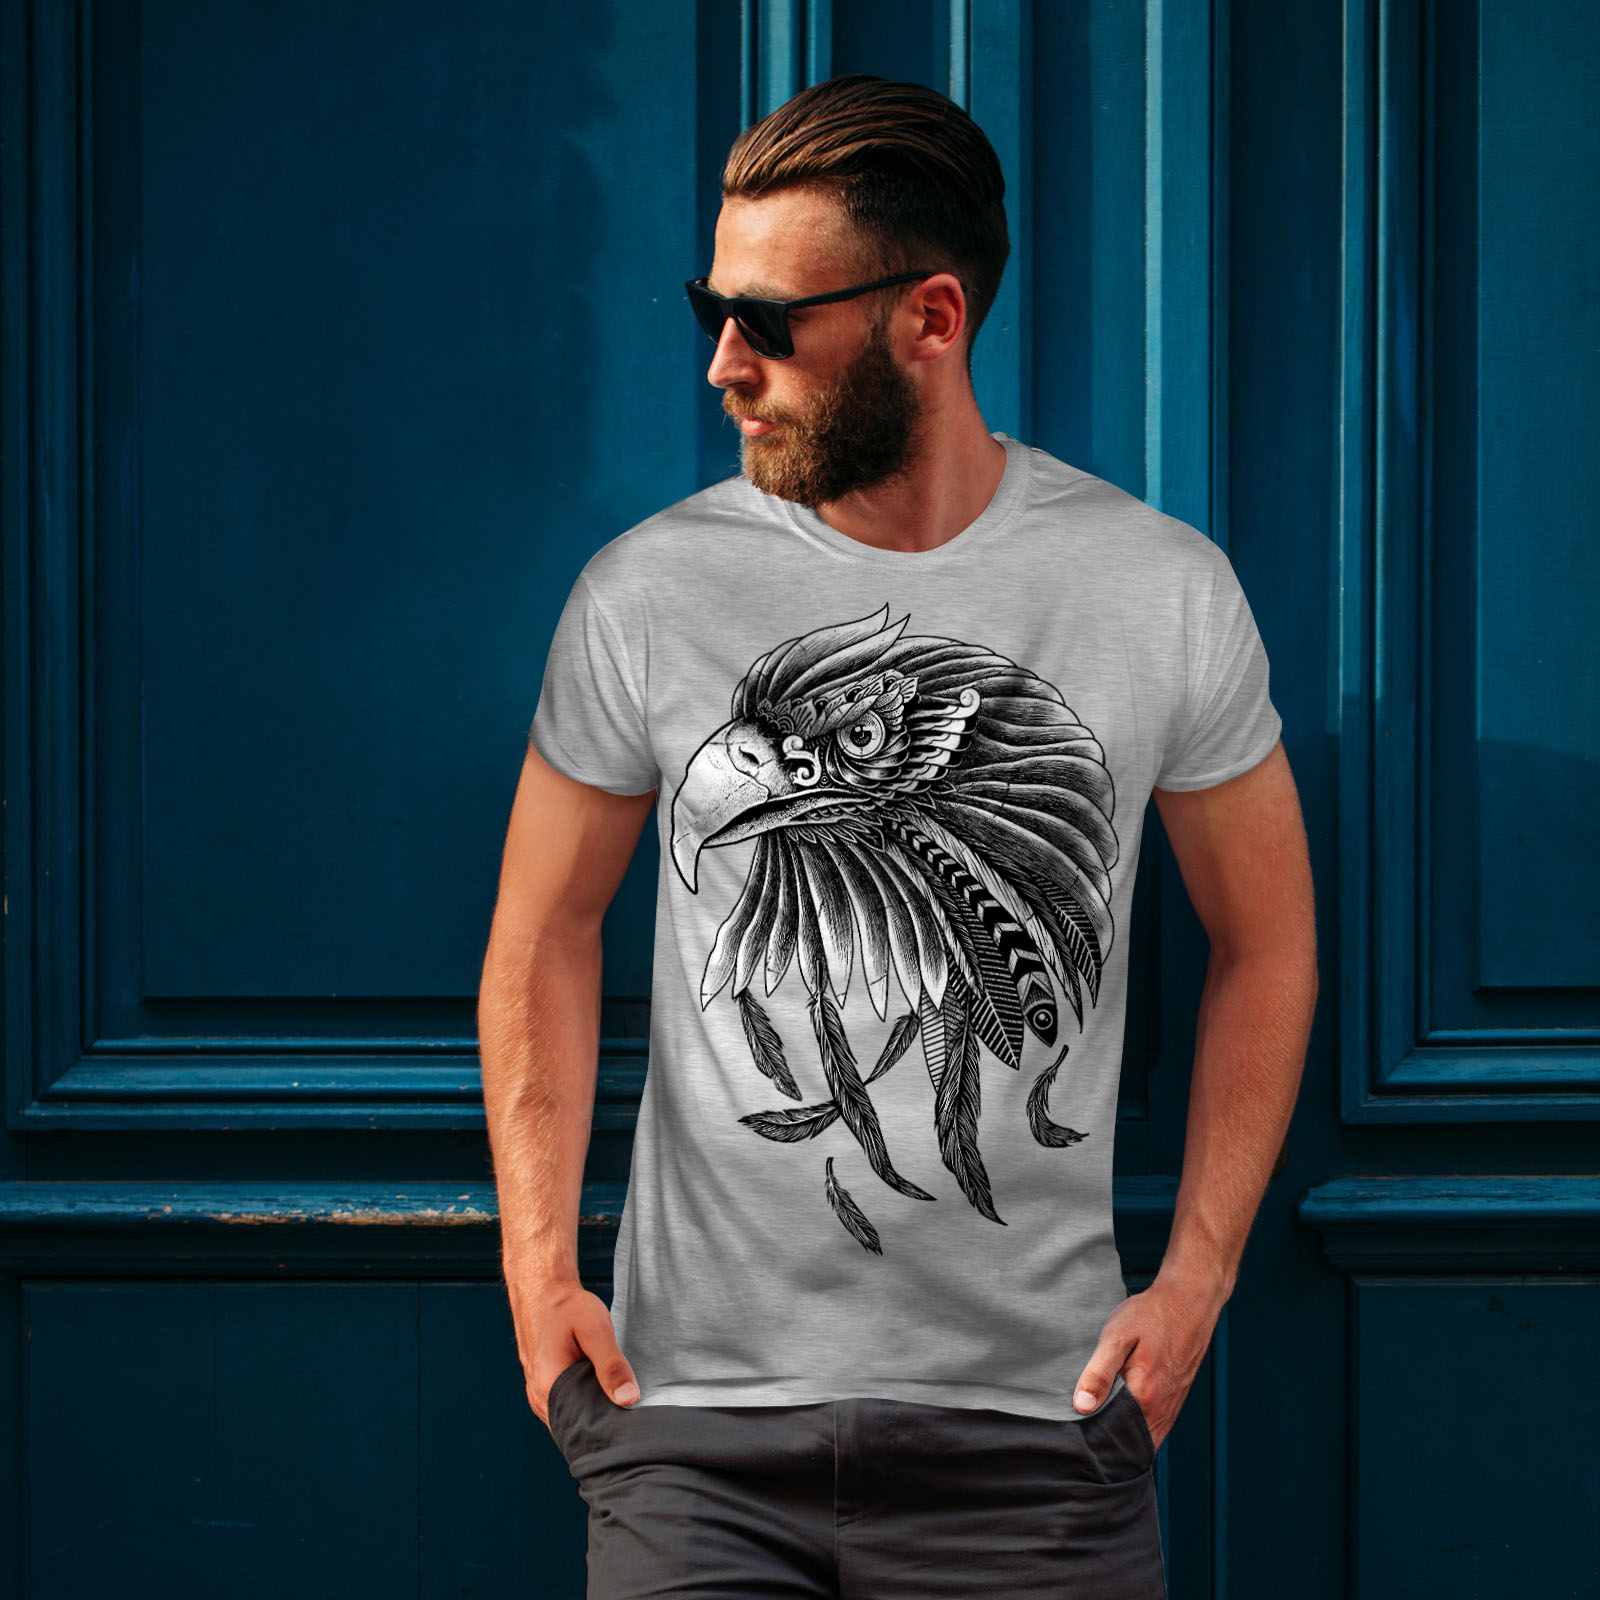 Black&White Graphic Design Printed Tee Wellcoda Lemur Head Theme Mens T-shirt 